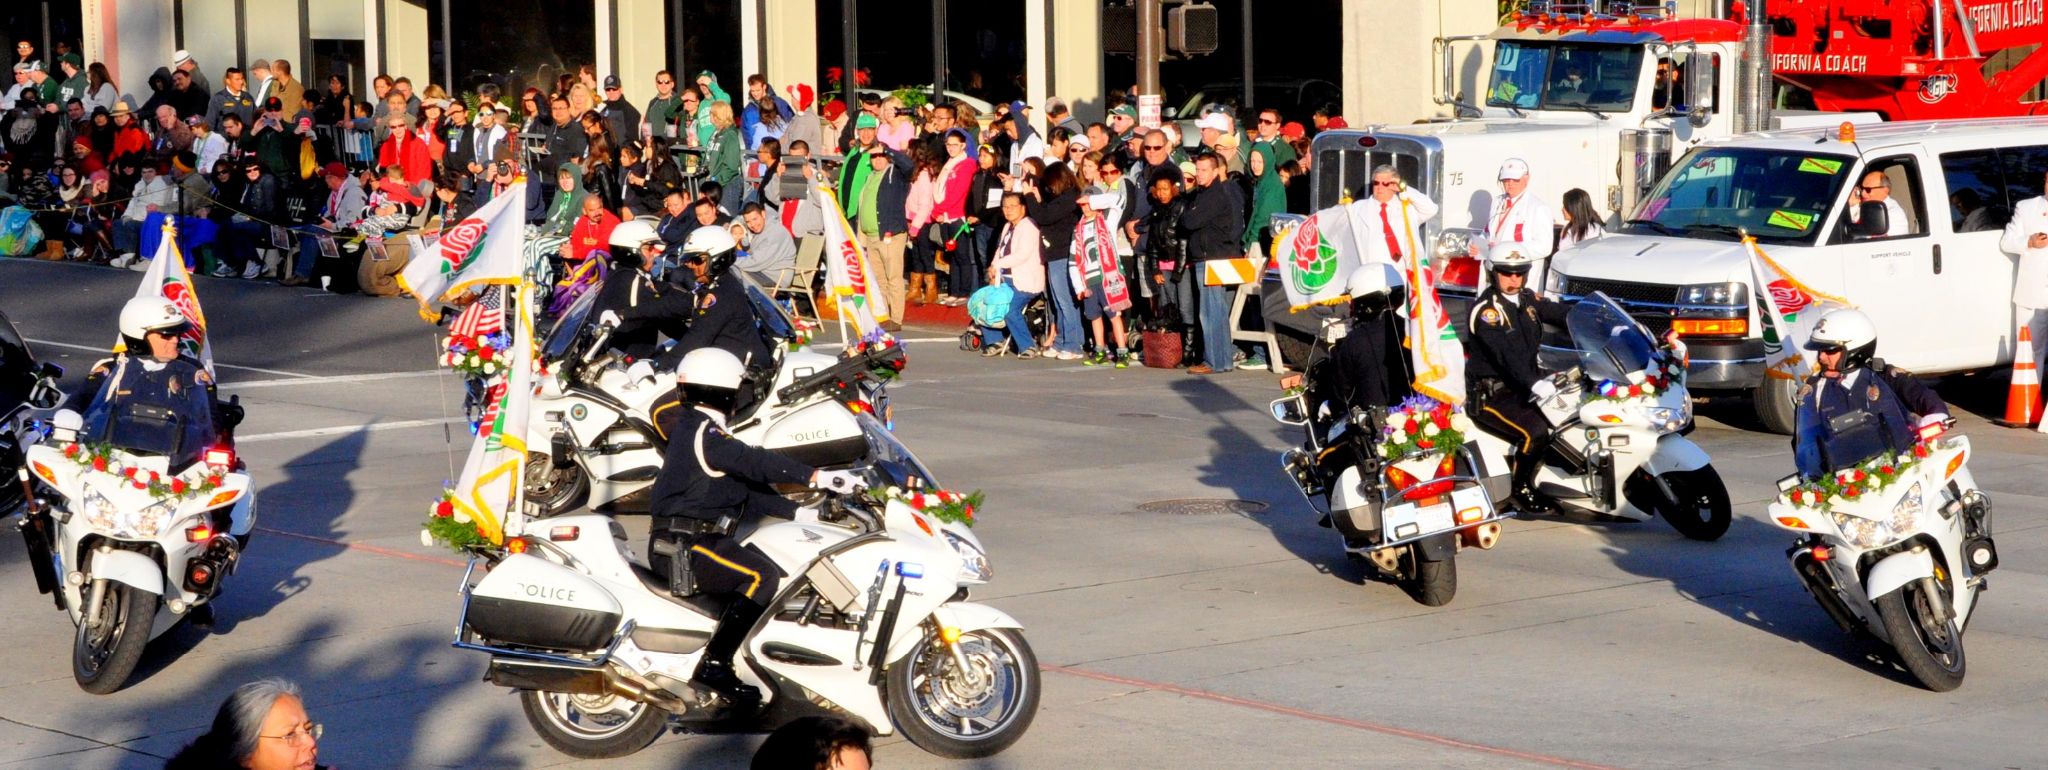 LA Police Precision Motorcycle Team (b), Tournament of Roses Parade, Pasadena, CA - 2014-01-01